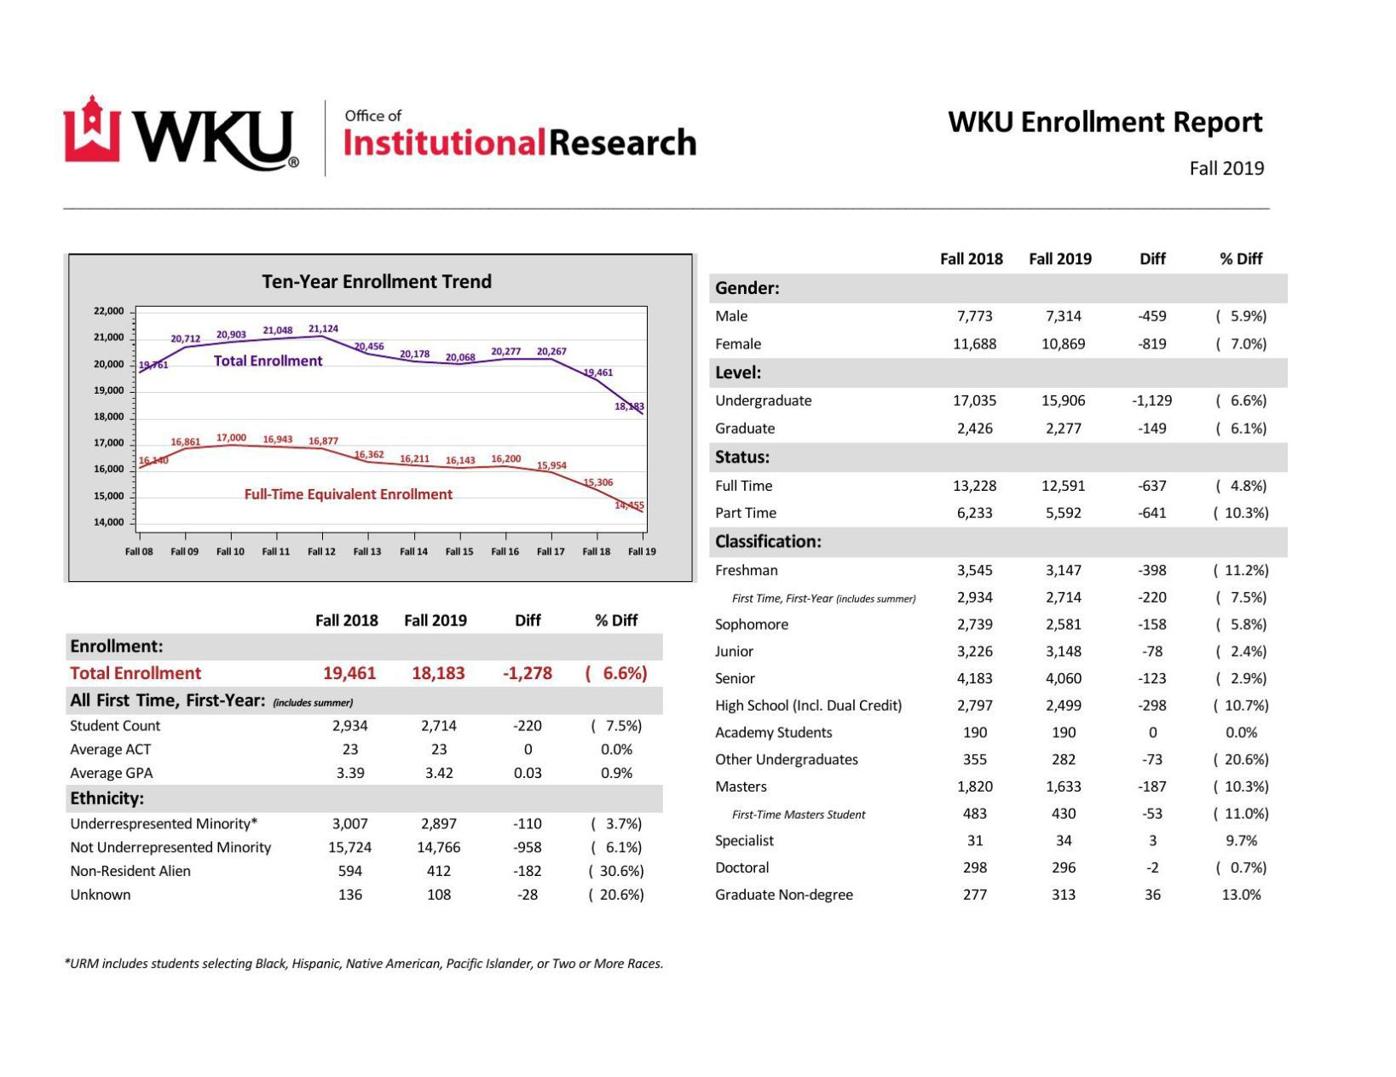 WKU's enrollment data for fall 2019